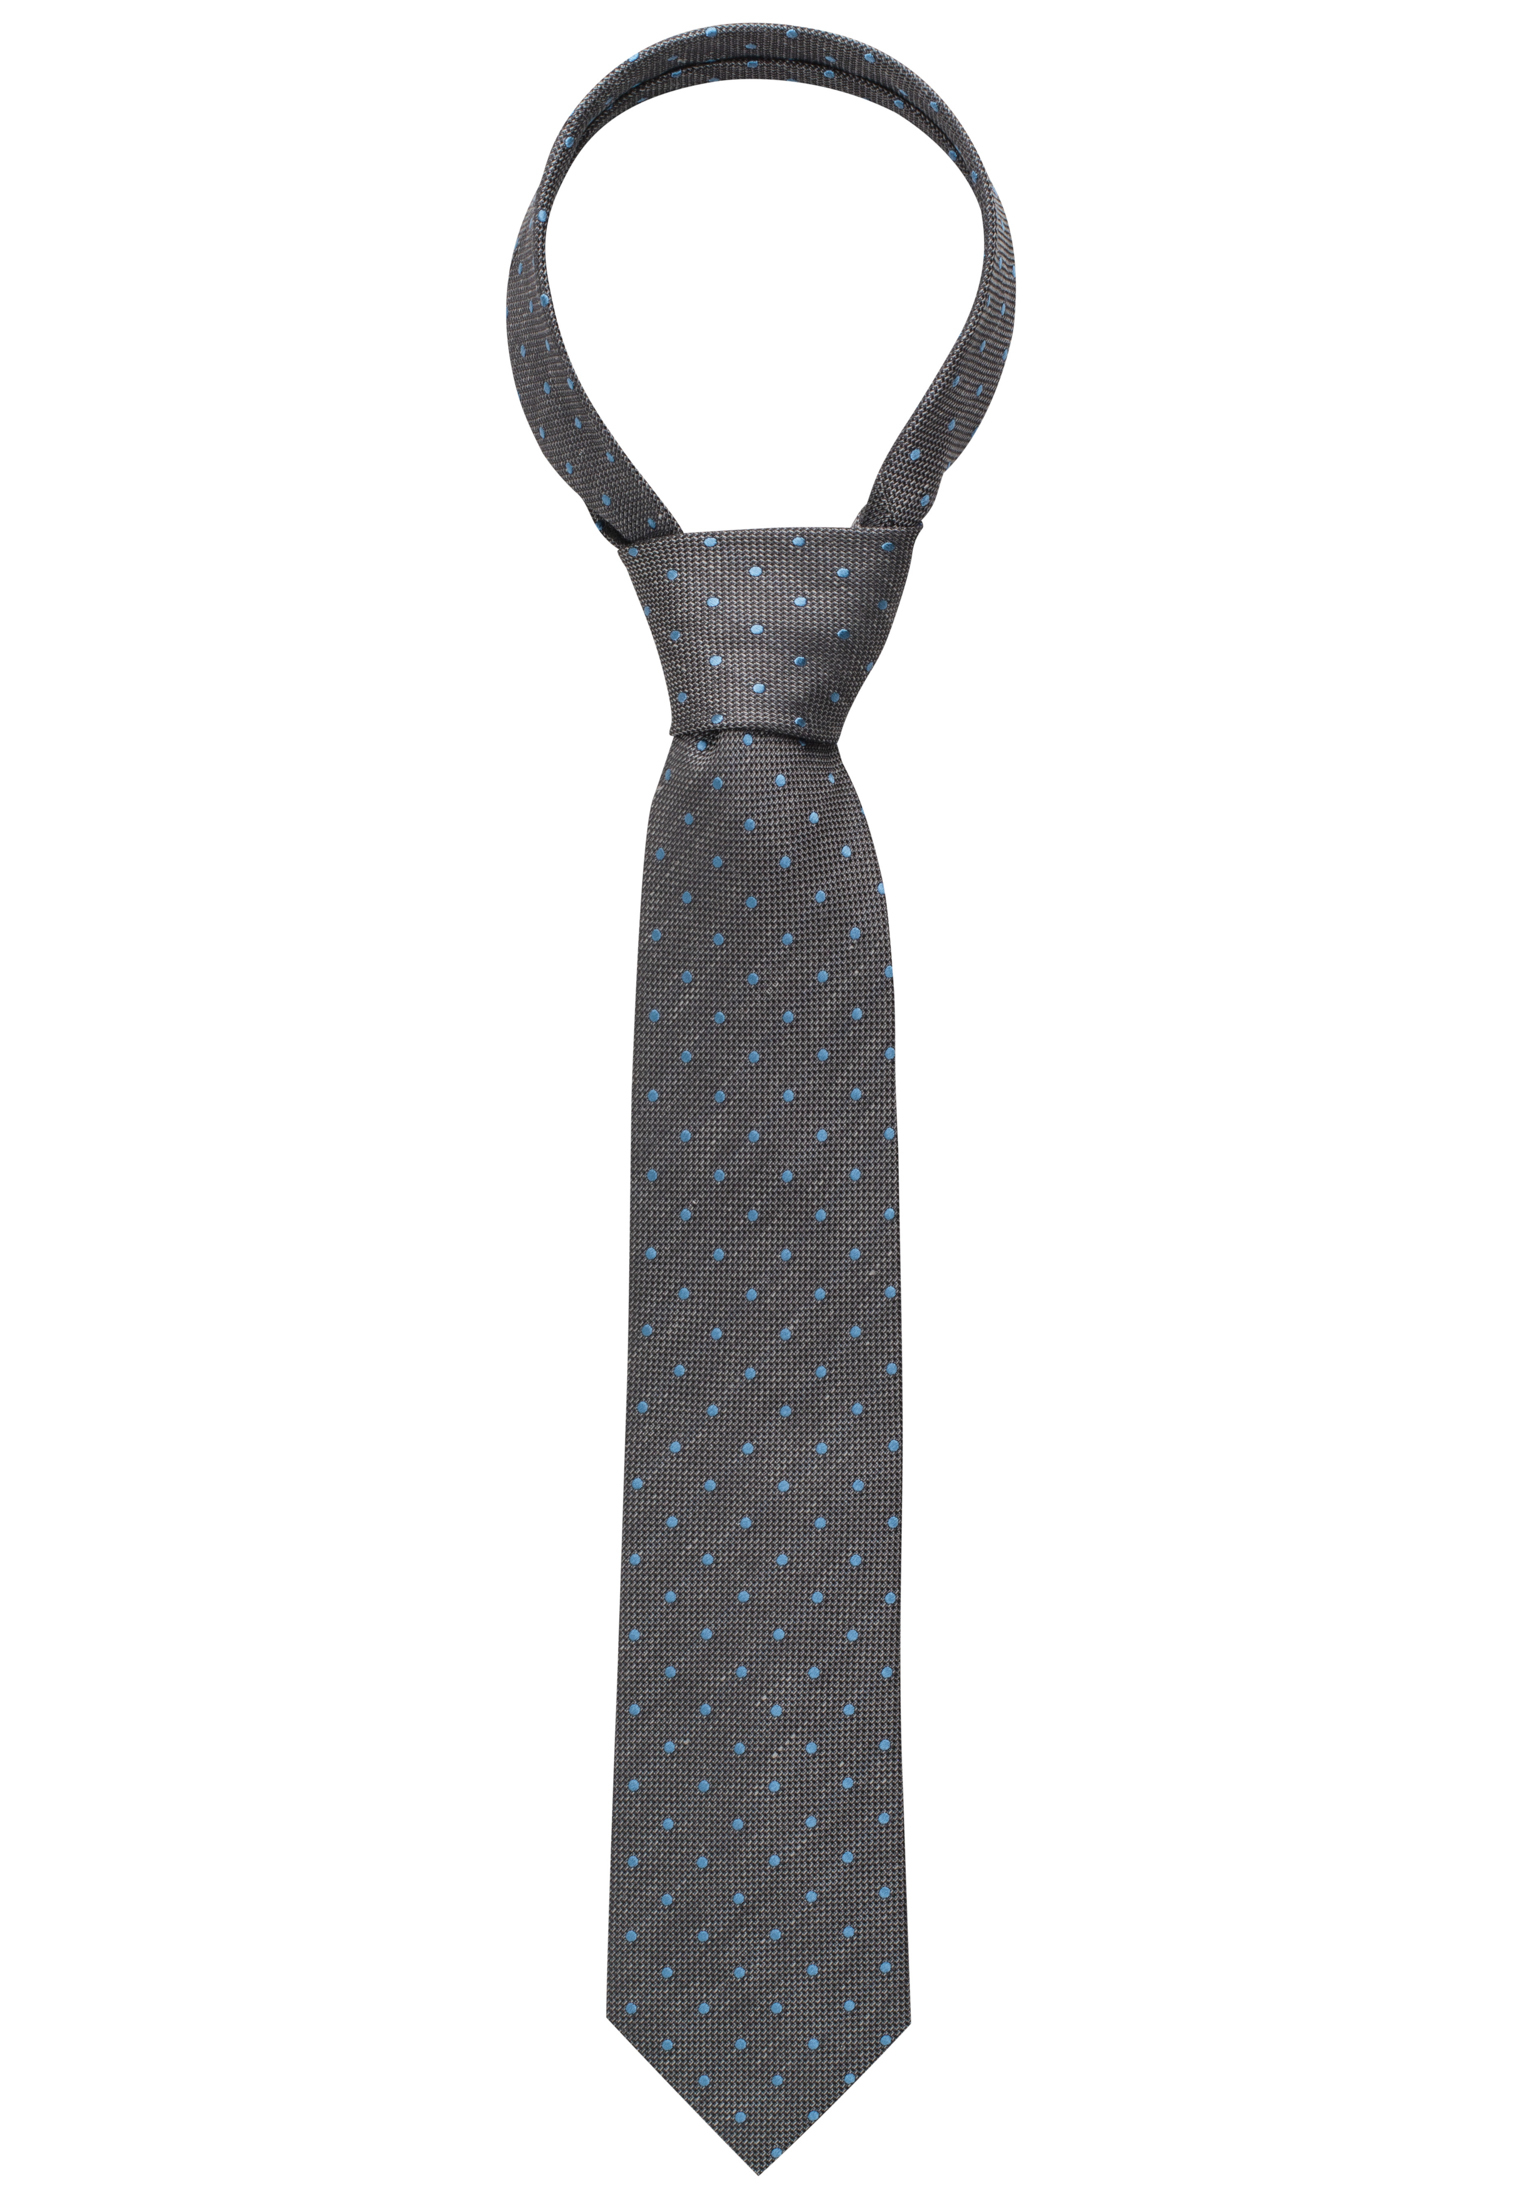 Krawatte in grau getupft | grau | 142 | 1AC00469-03-01-142